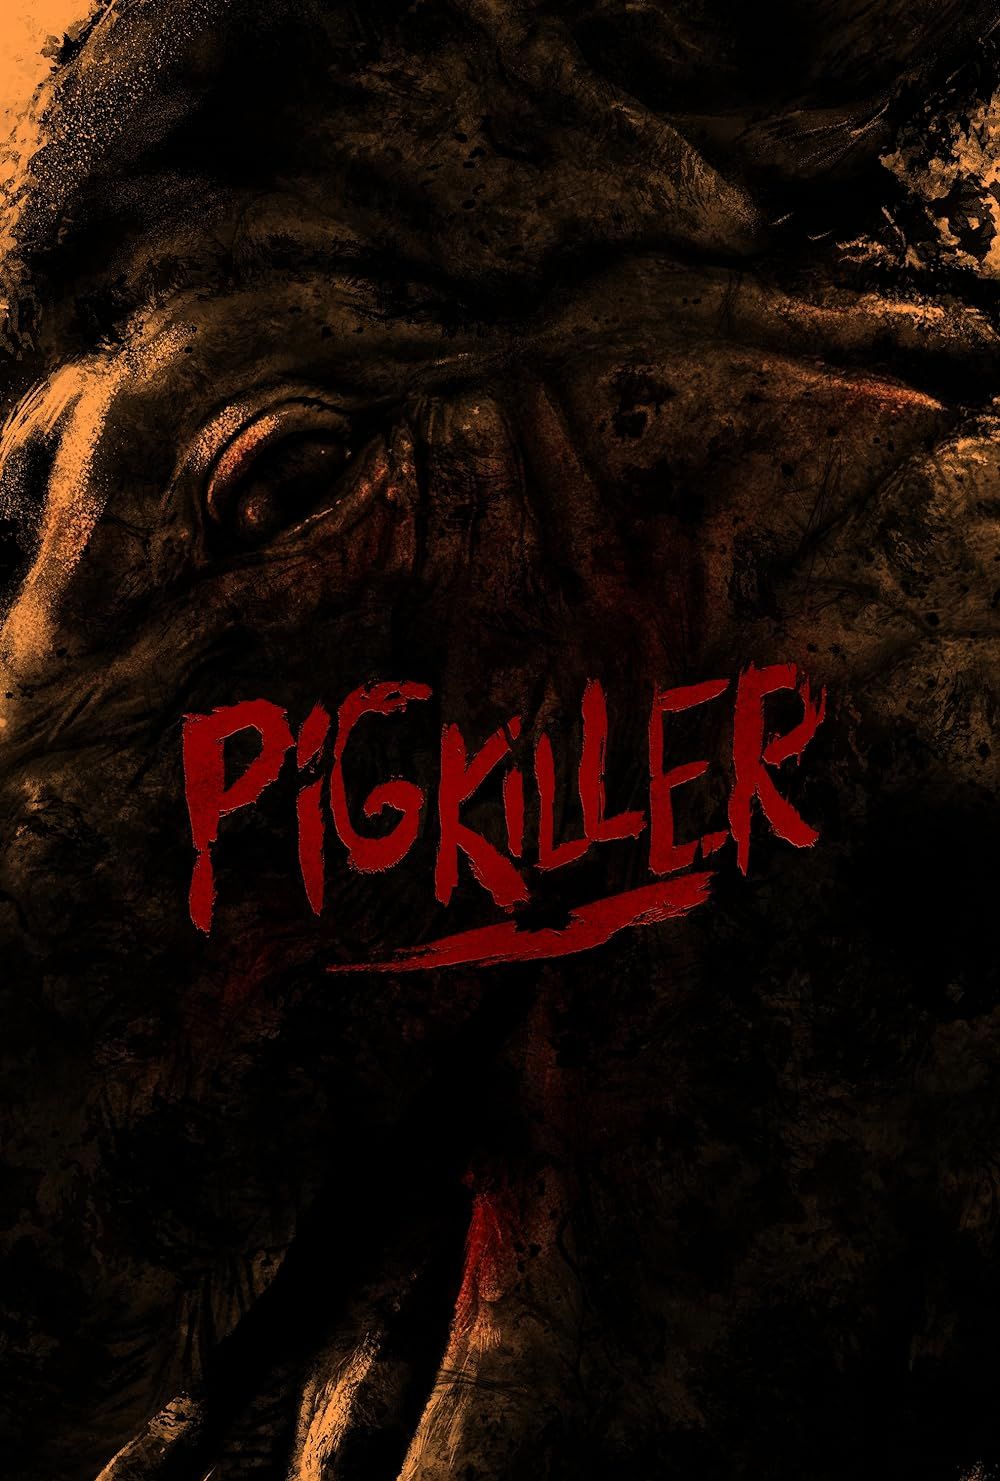 Pig Killer 2022 Telugu Unofficial Dubbed 1xBet